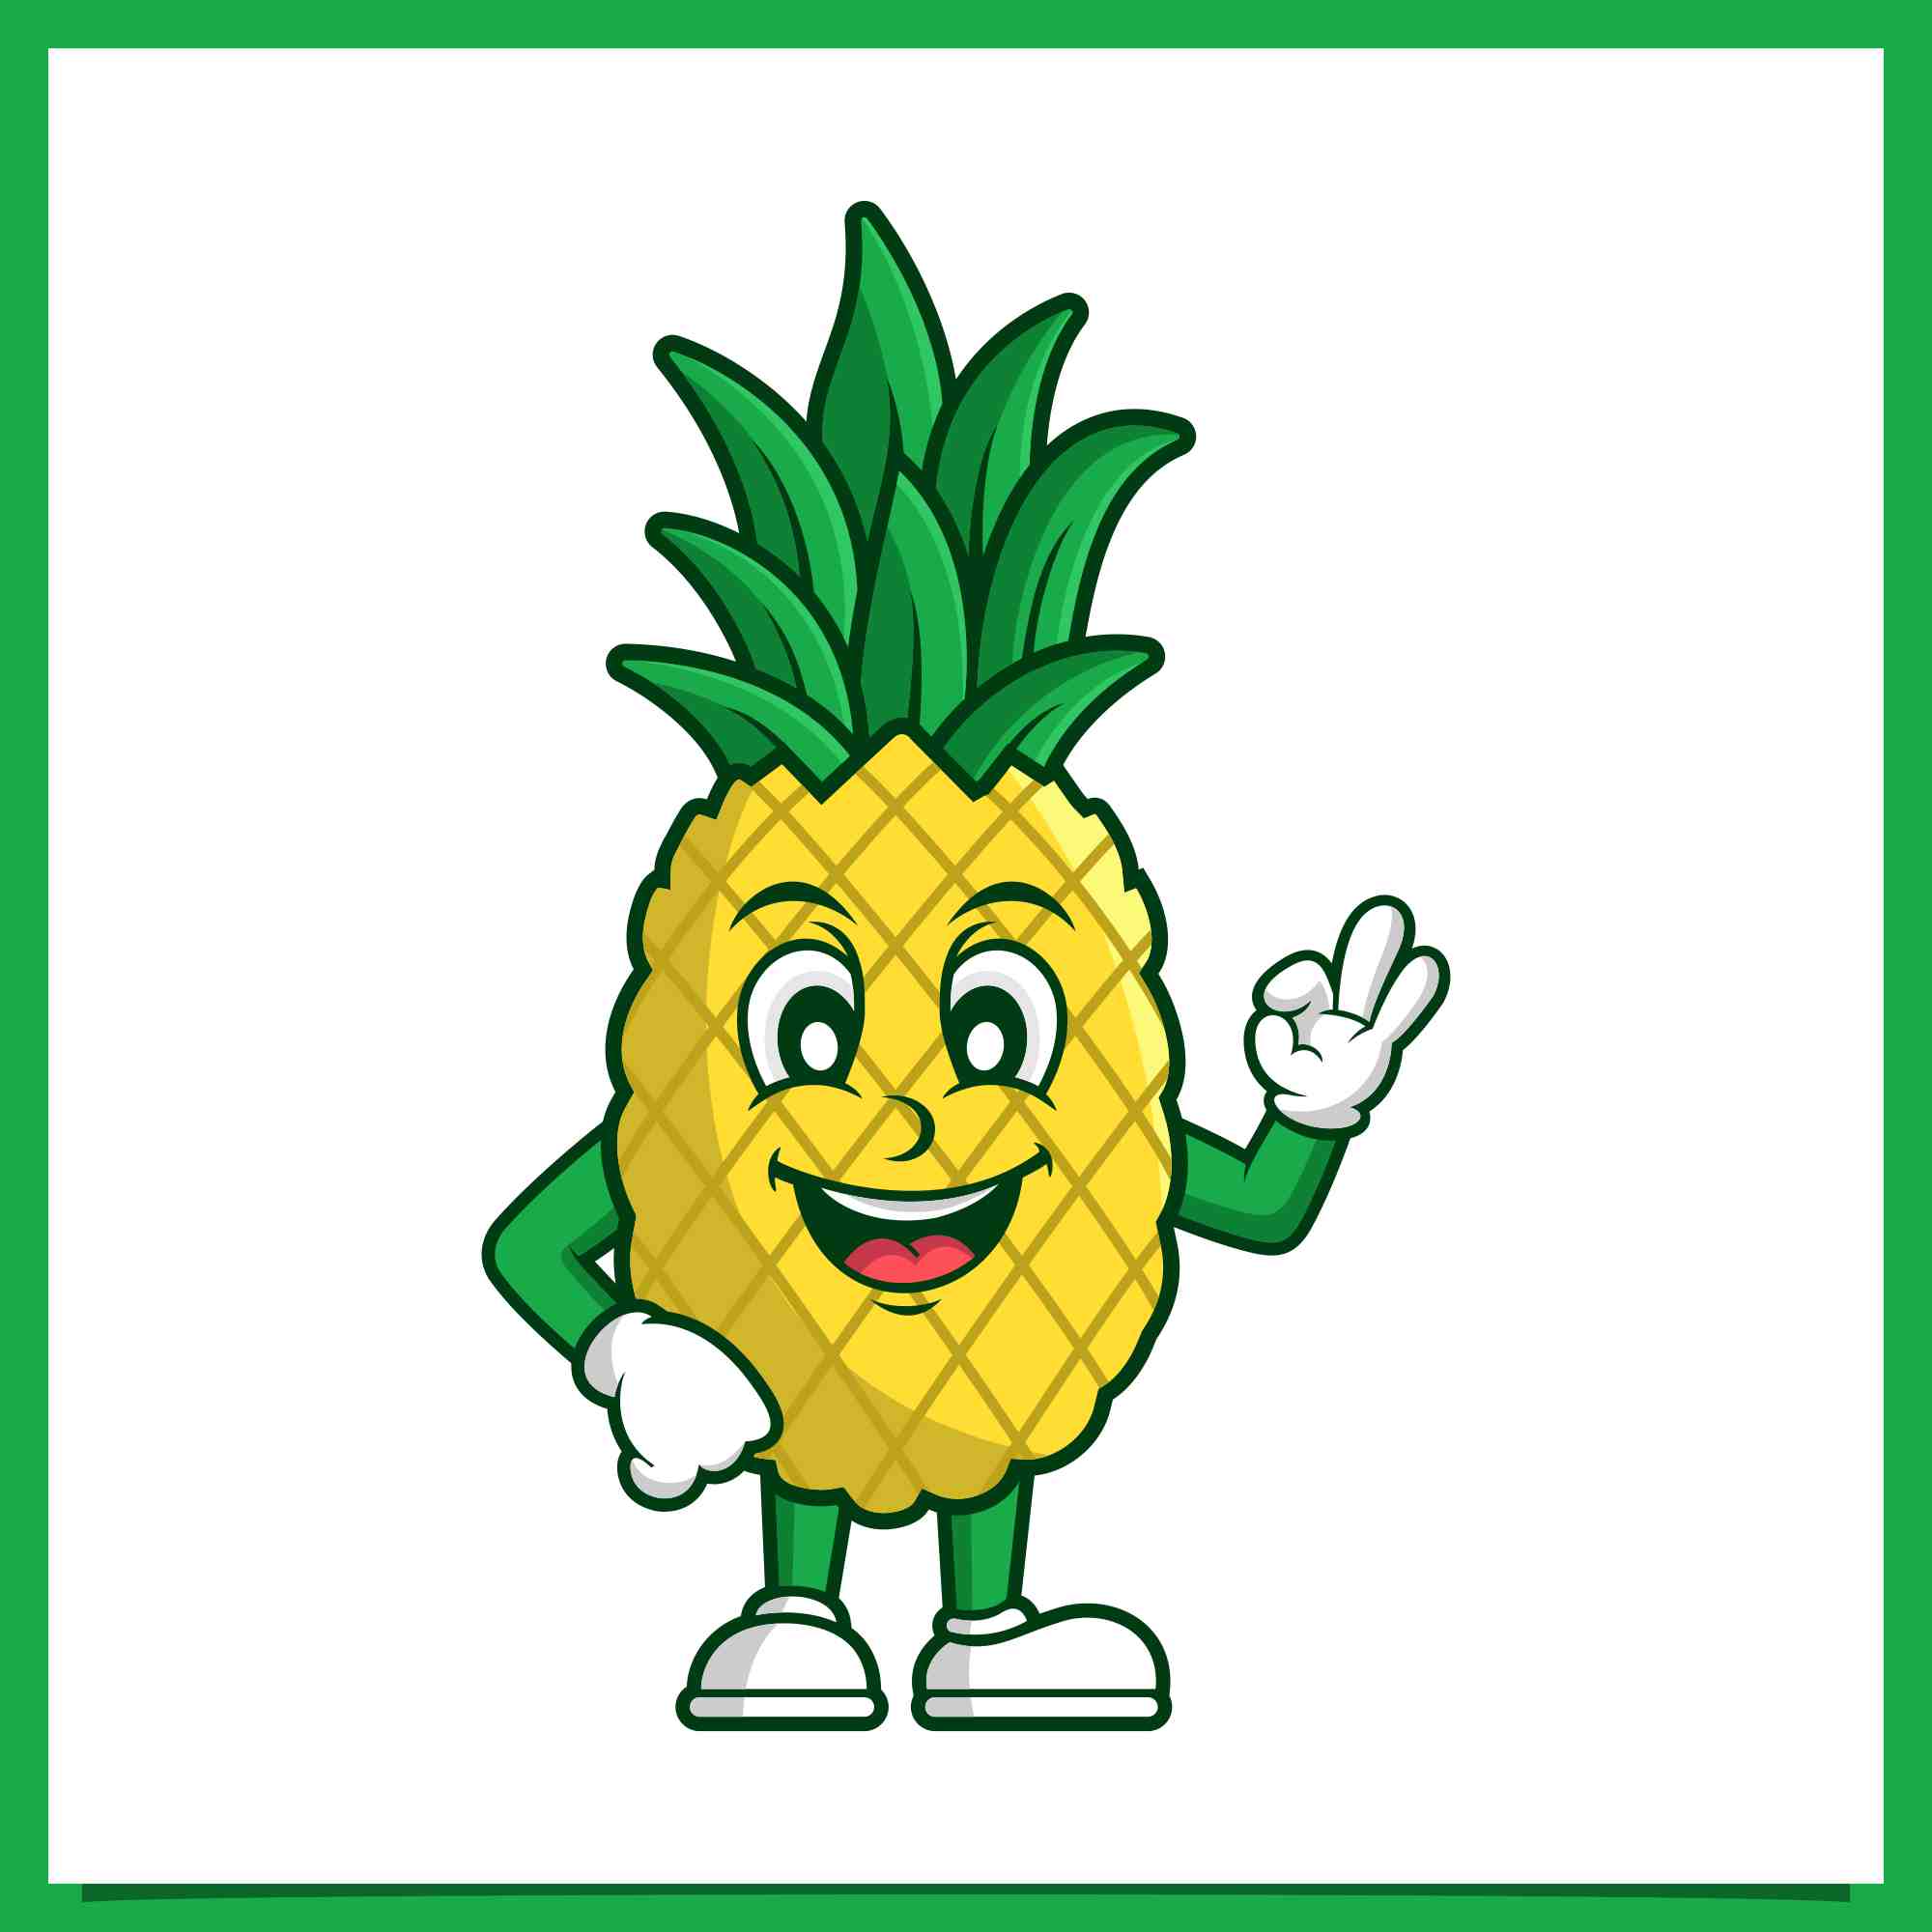 Set Pineapple fruit mascot cartoon logo design - $6 preview image.